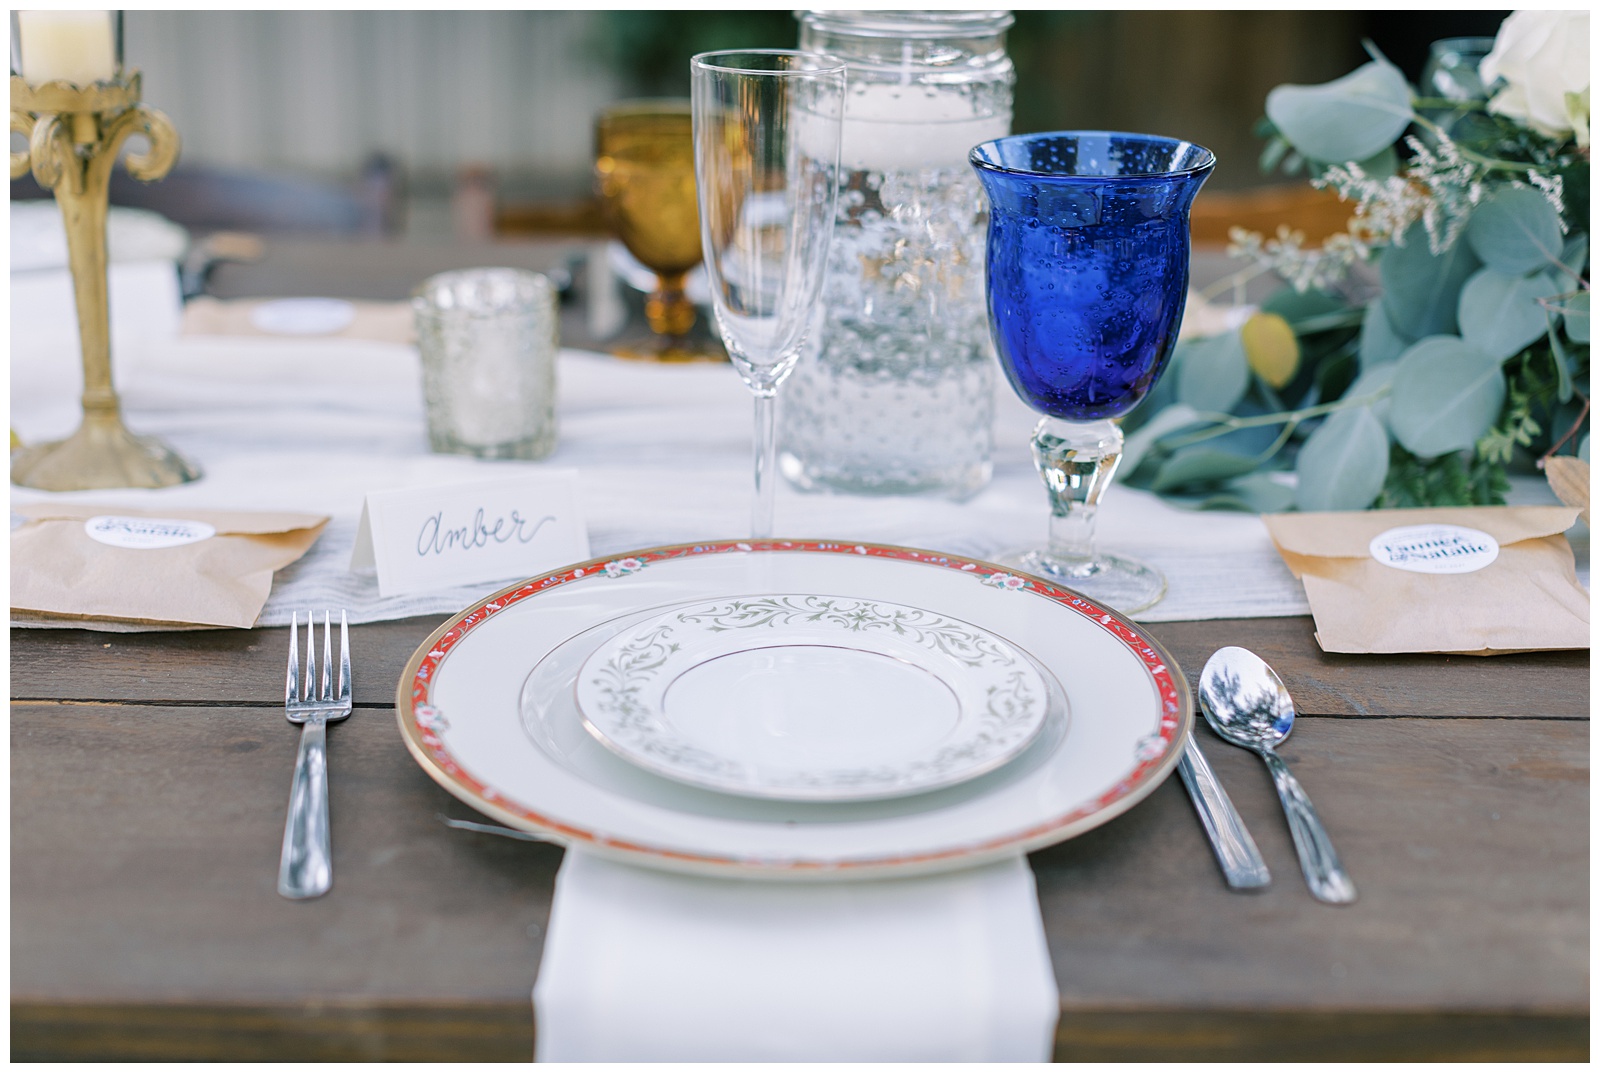 vintage plates on wooden farm style table wedding reception decor